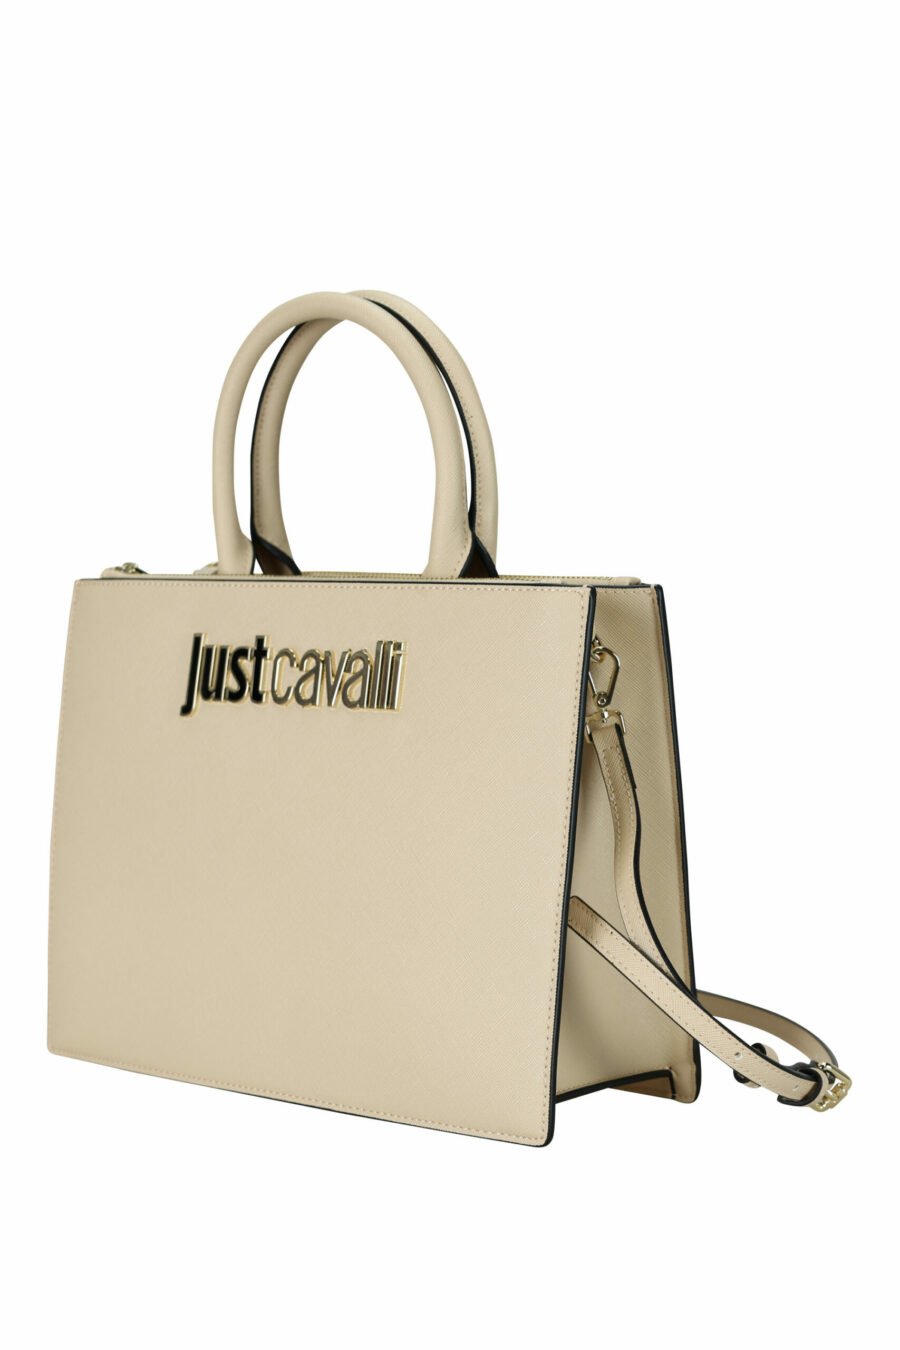 Beige handbag with gold maxilogo "lettering" - 8052672733894 1 scaled